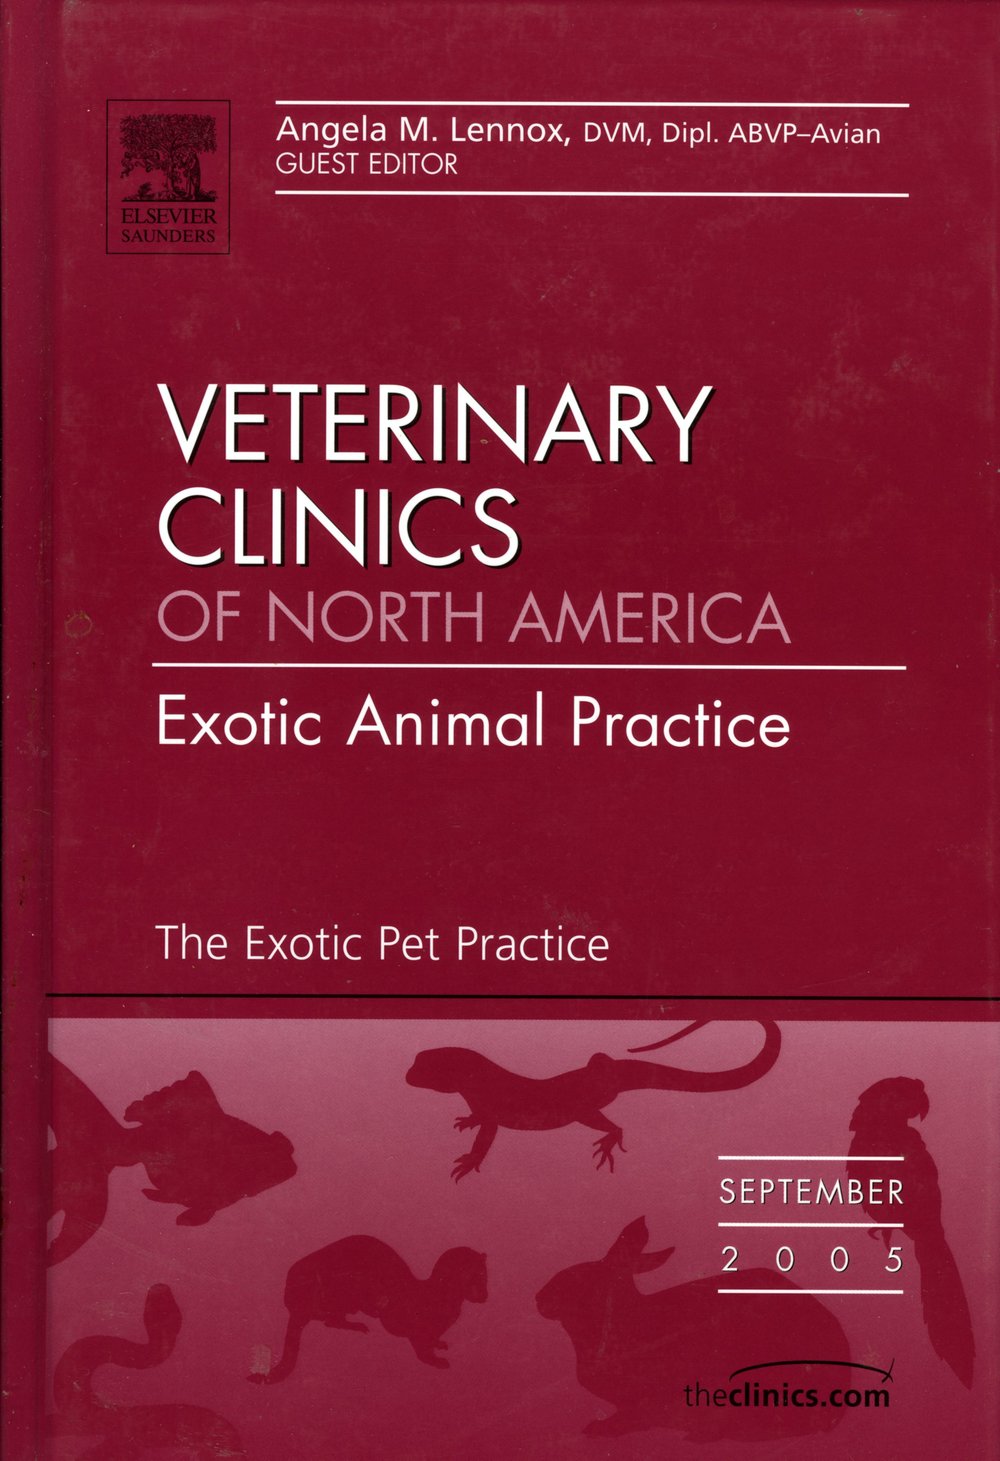 Exotic Companion Mammals 洋書診療 エキゾチックアニマル - 参考書